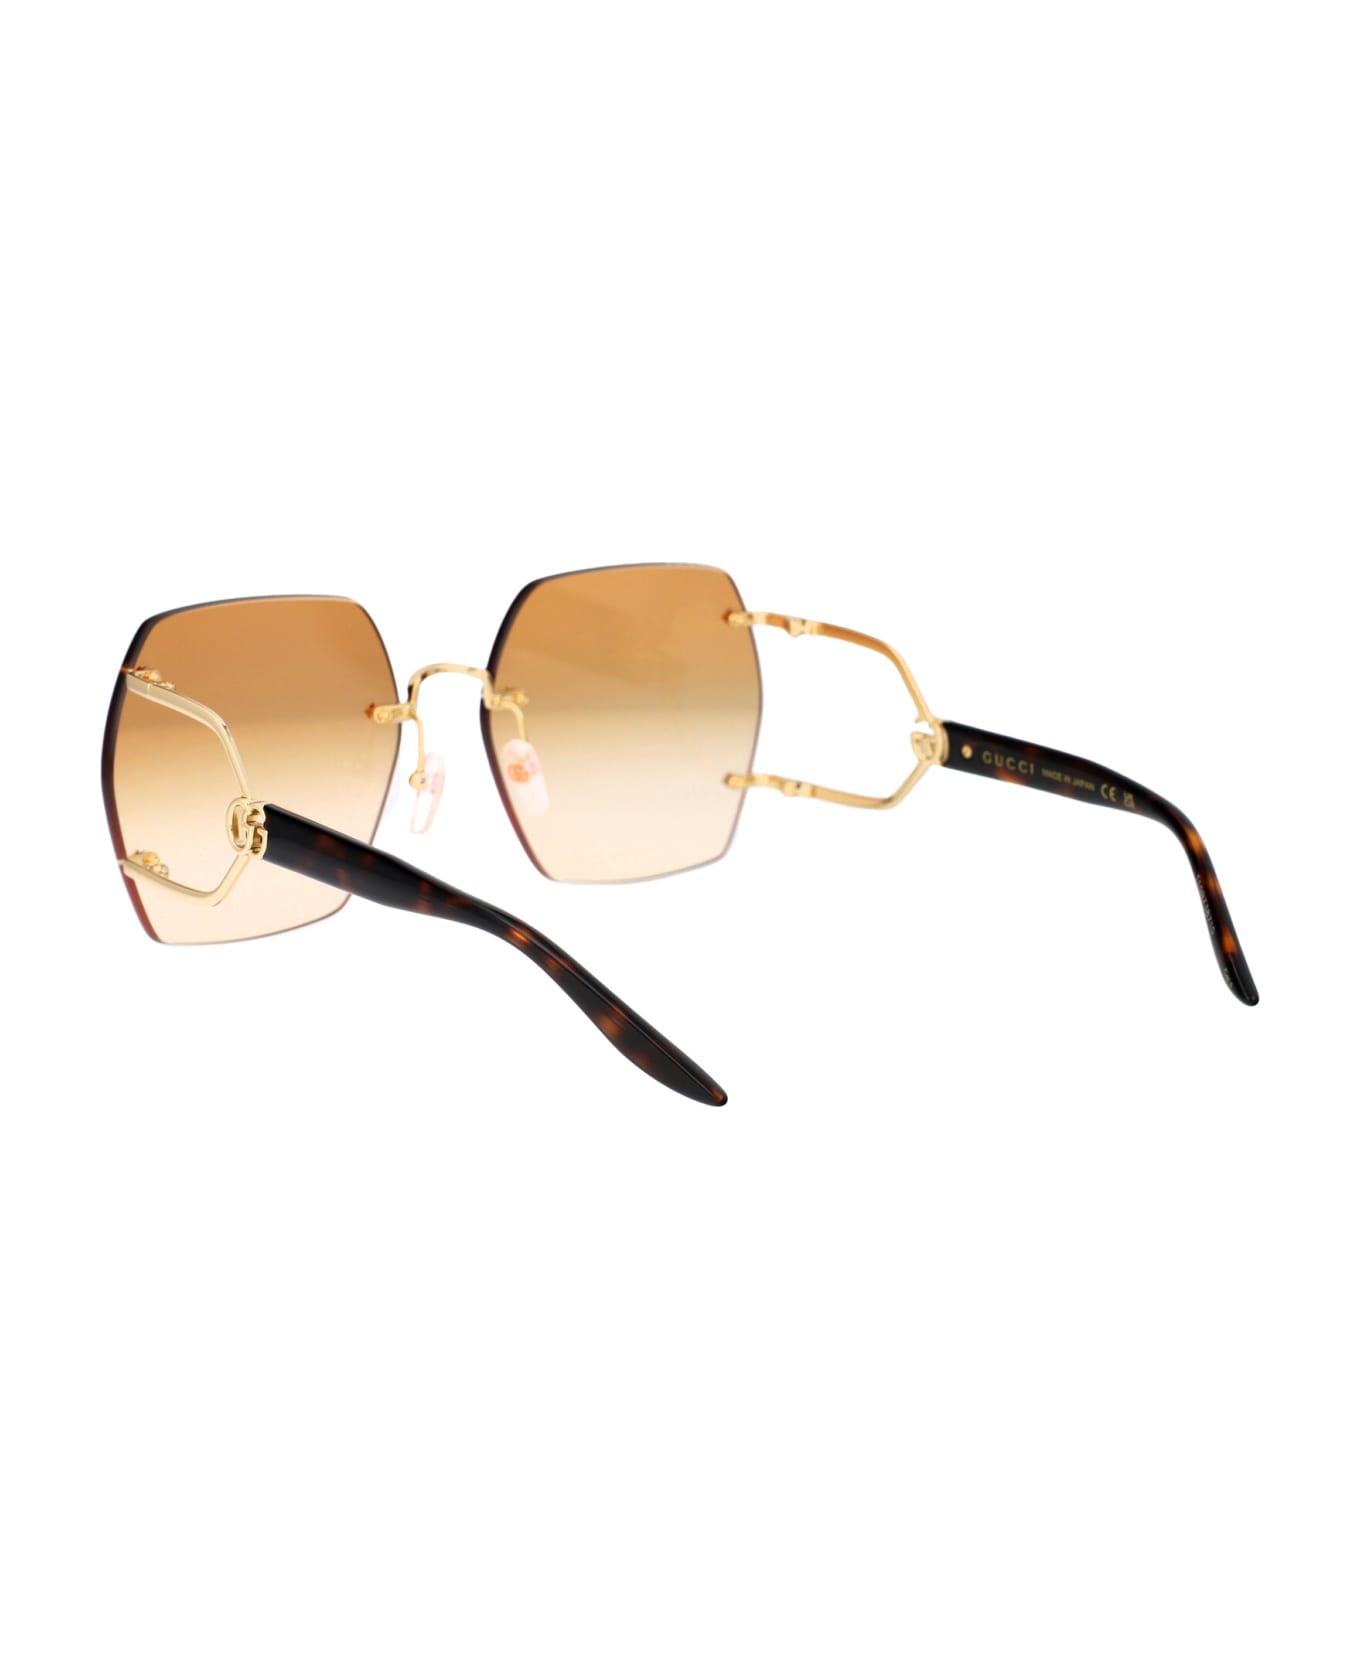 Gucci Eyewear Gg1562s Sunglasses - 003 GOLD HAVANA ORANGE